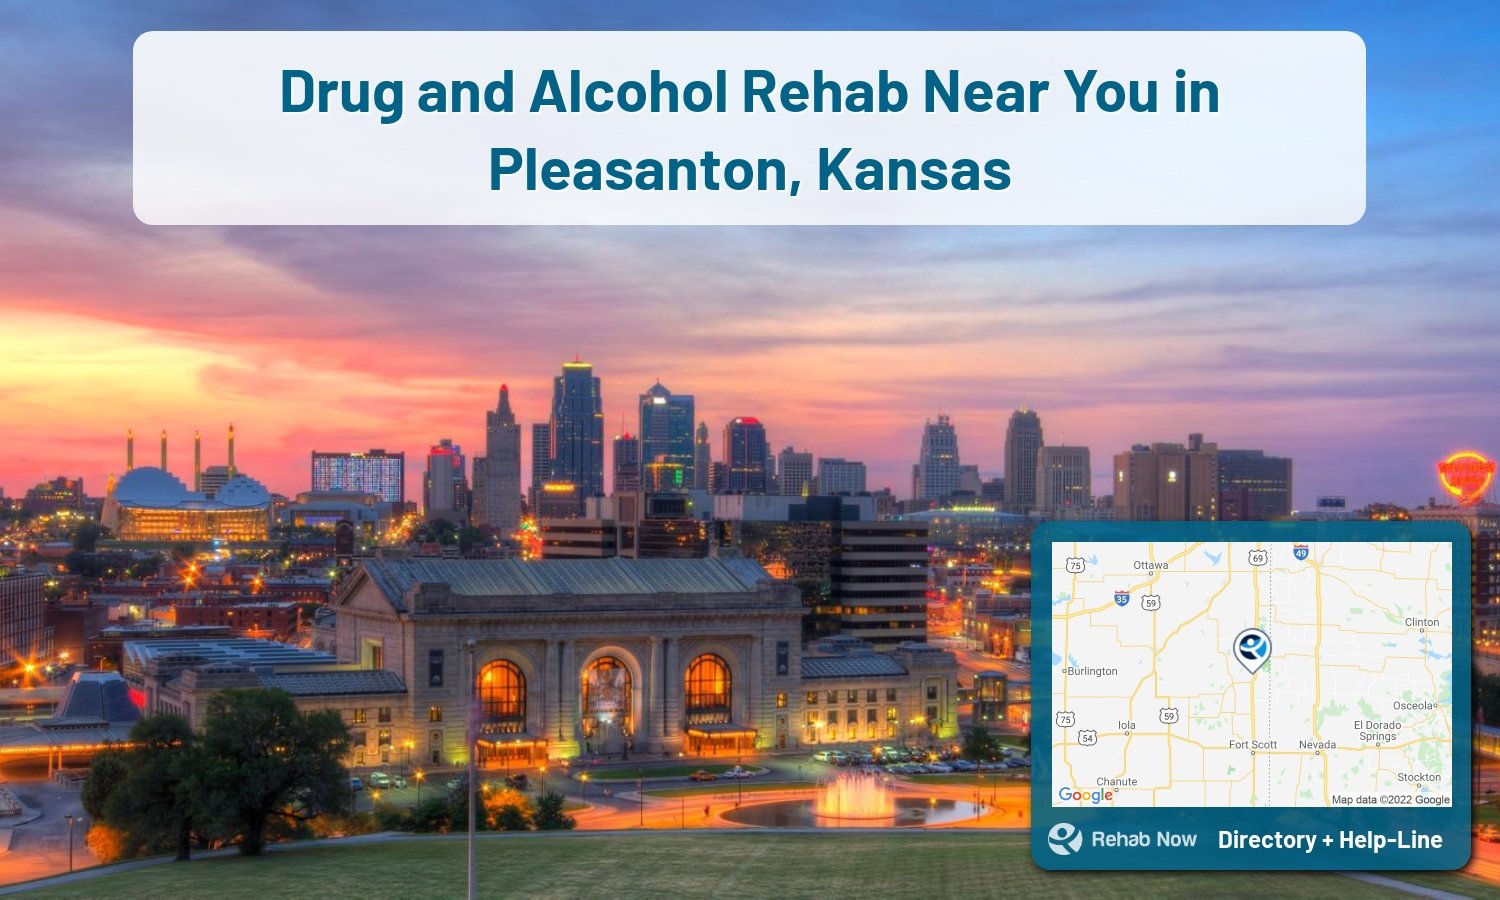 Pleasanton, KS Treatment Centers. Find drug rehab in Pleasanton, Kansas, or detox and treatment programs. Get the right help now!